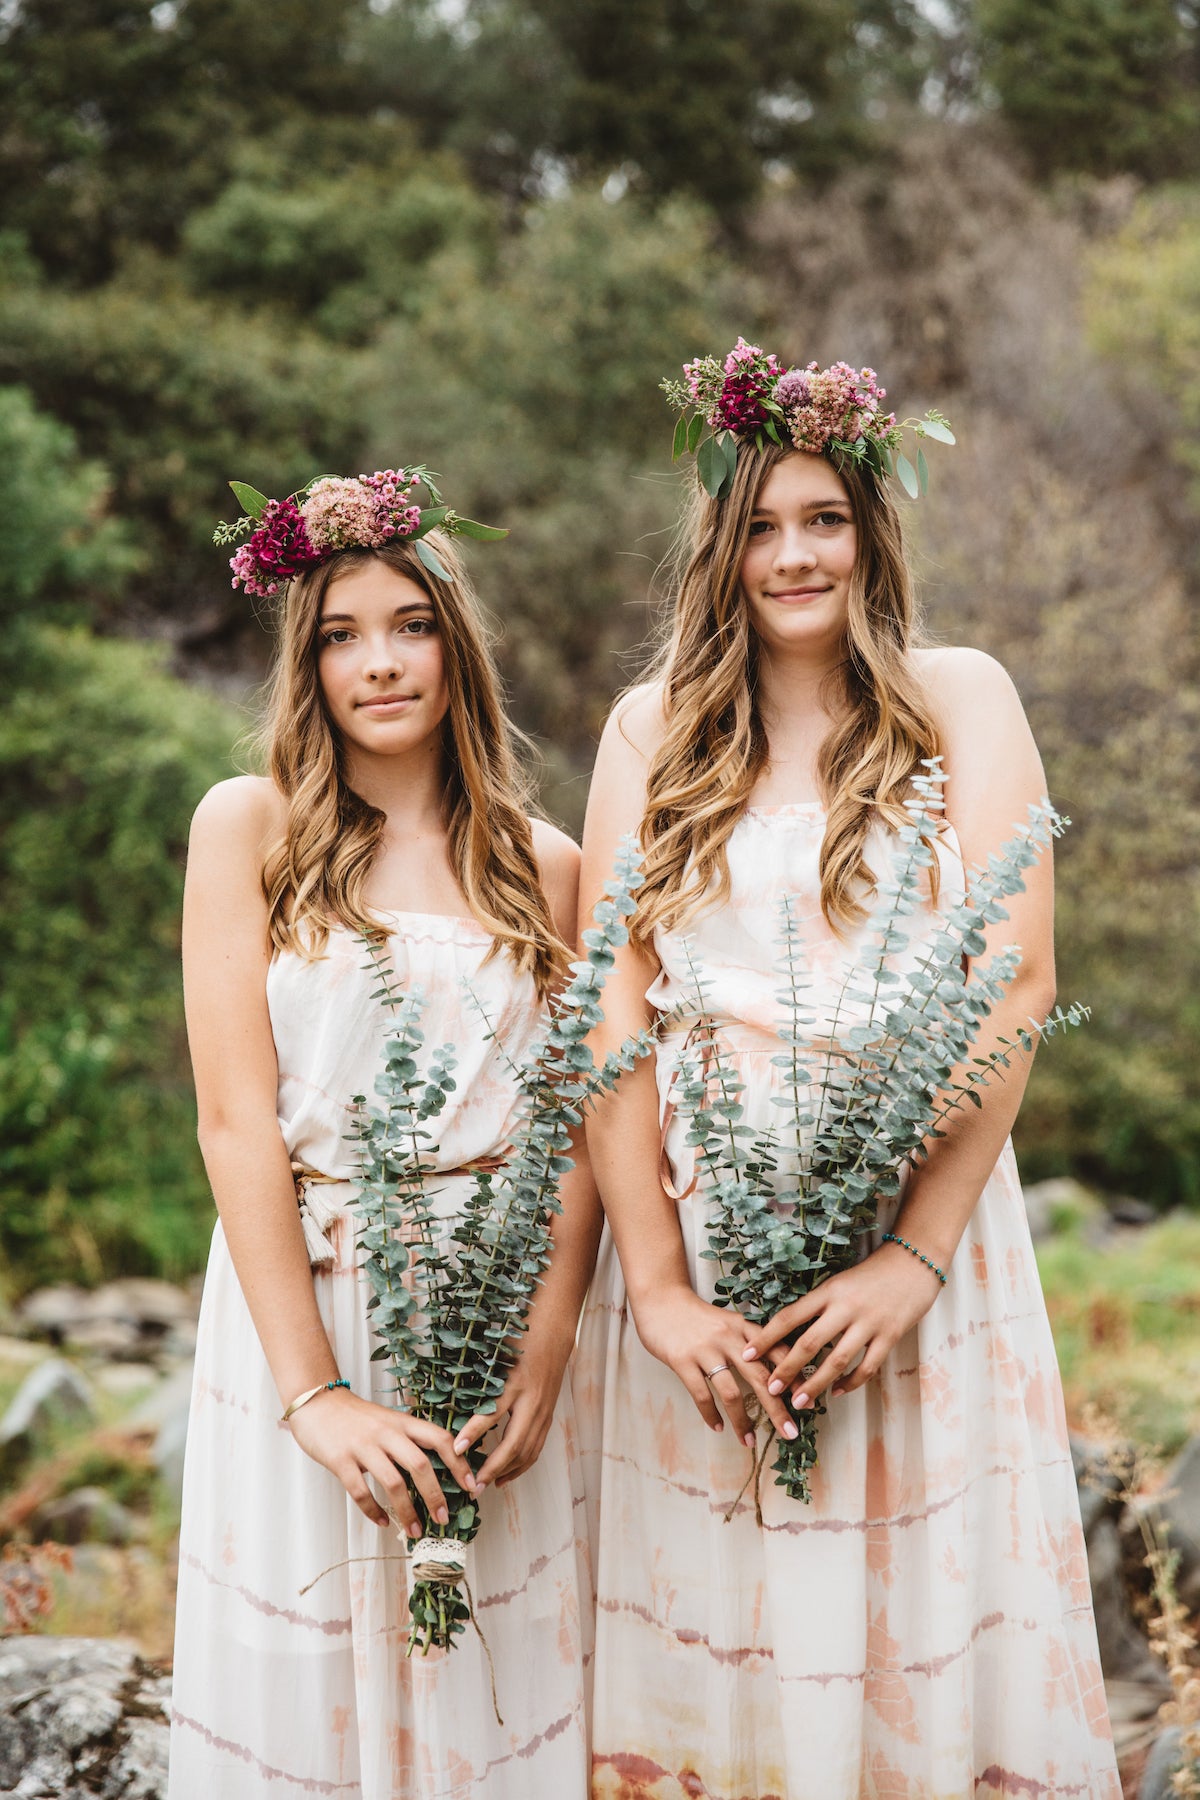 Flower girls in flower crowns holding bouquets